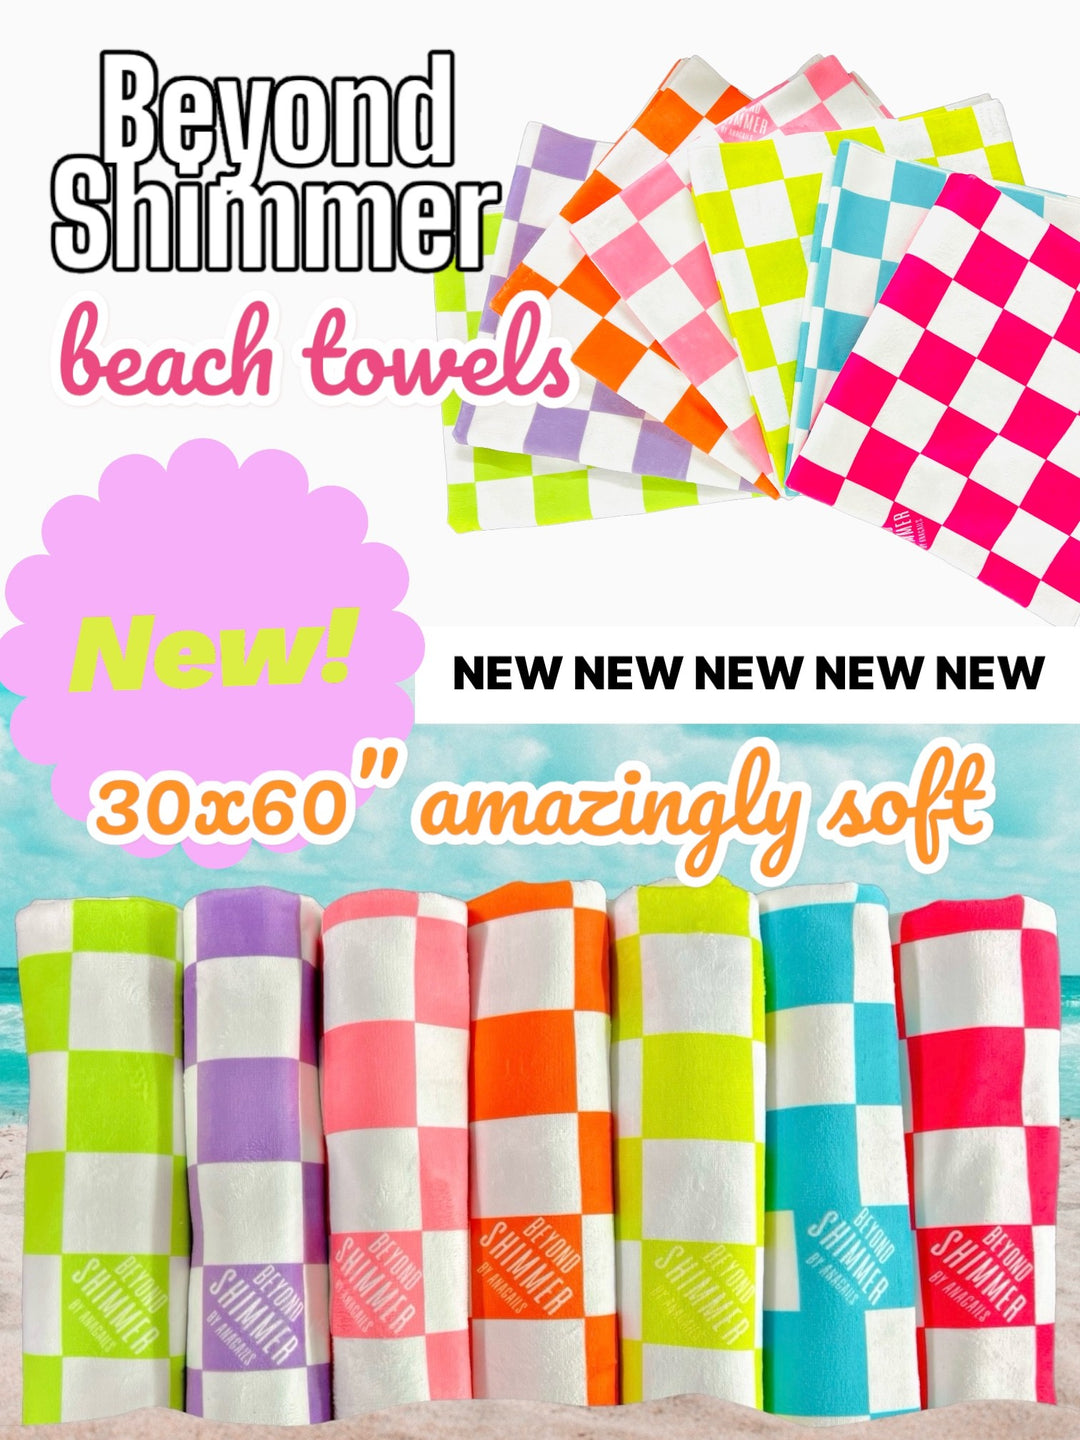 Checkered Neon Beach Towel